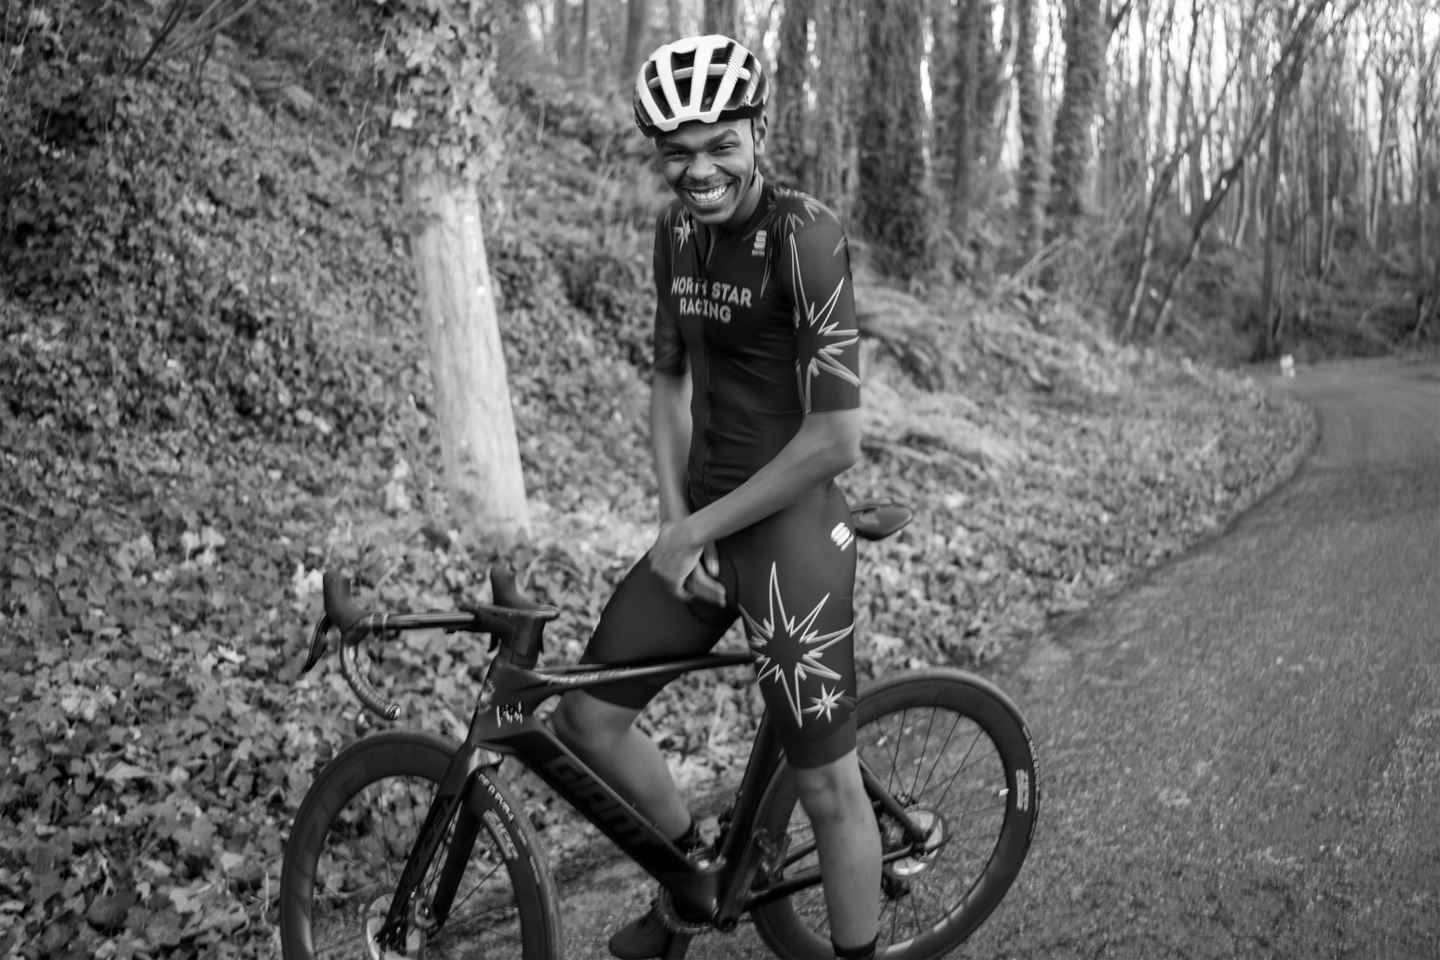 Trevon Mitchell smiling on his bike.